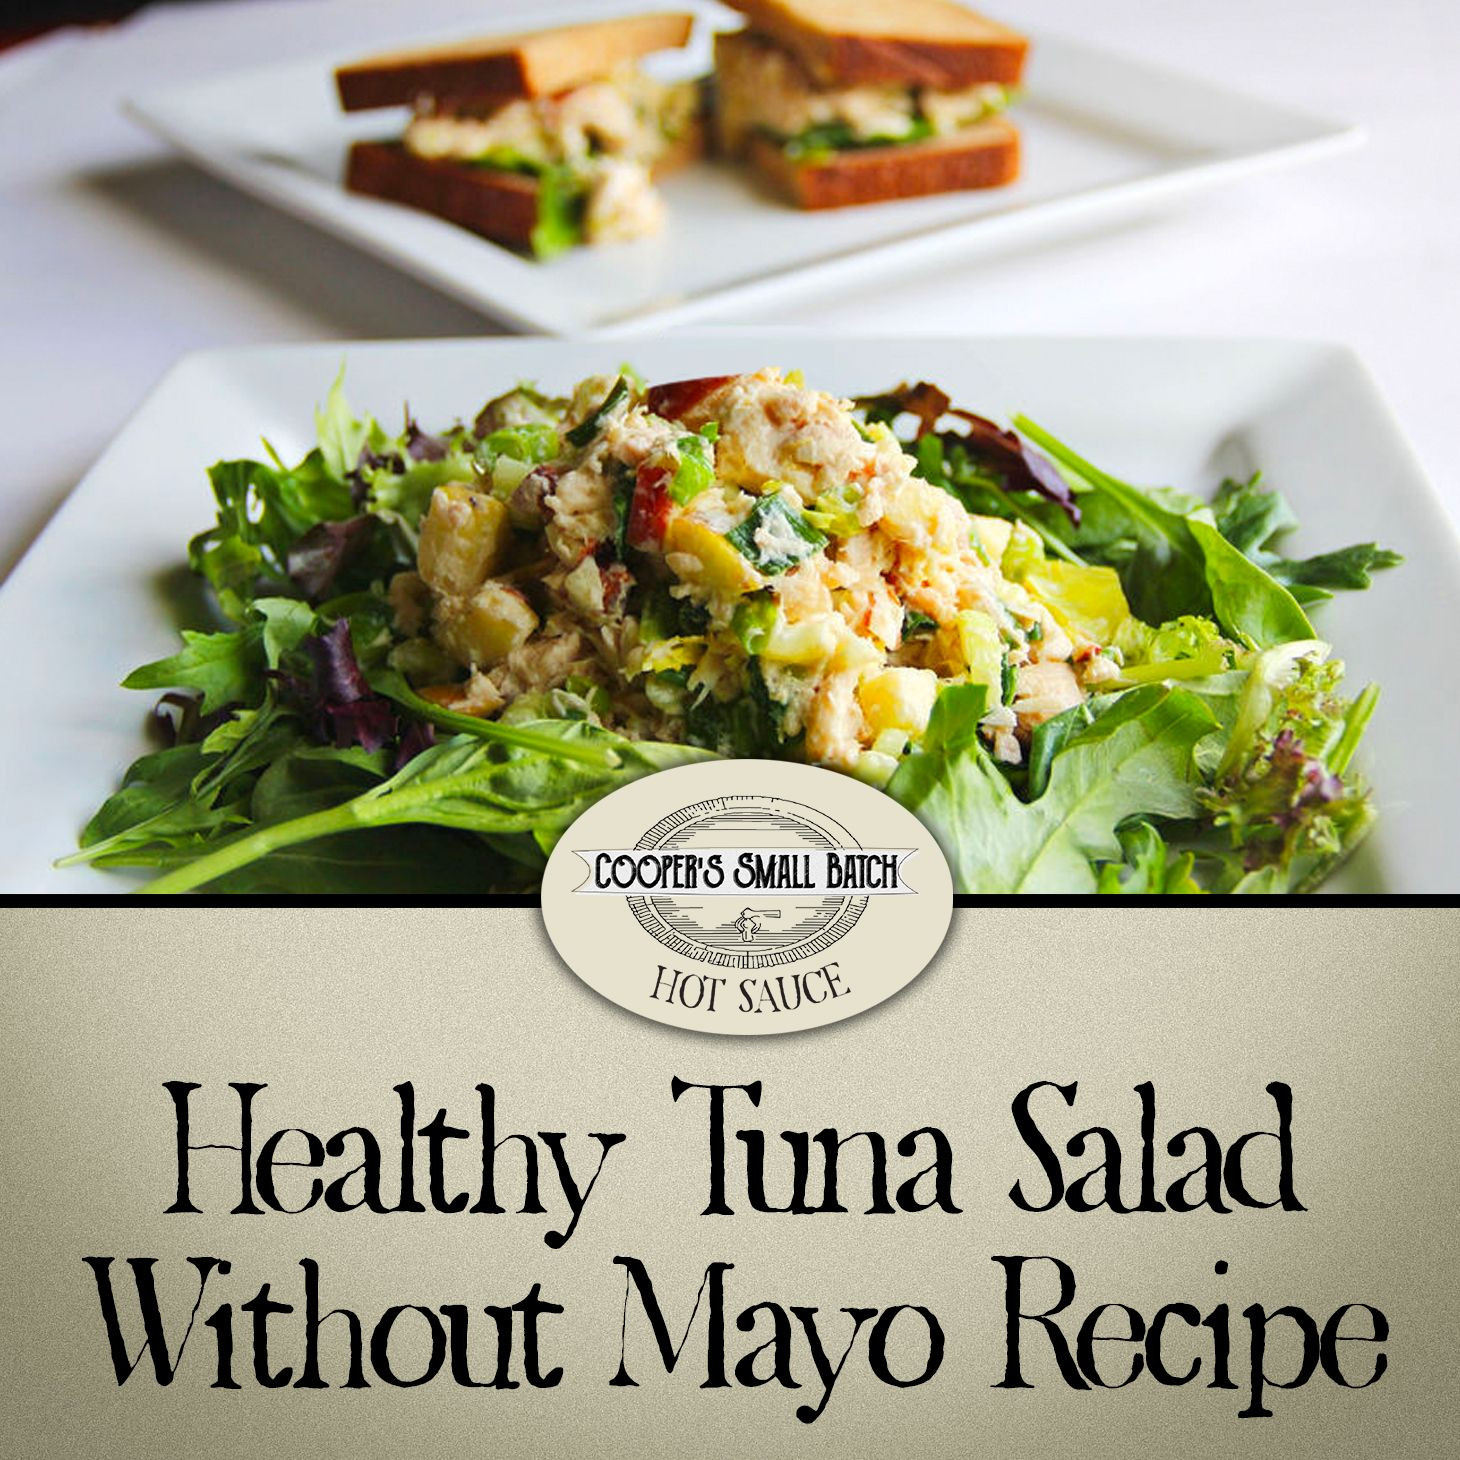 Tuna Fish Recipes Without Mayonnaise
 Healthy Tuna Salad Without Mayo